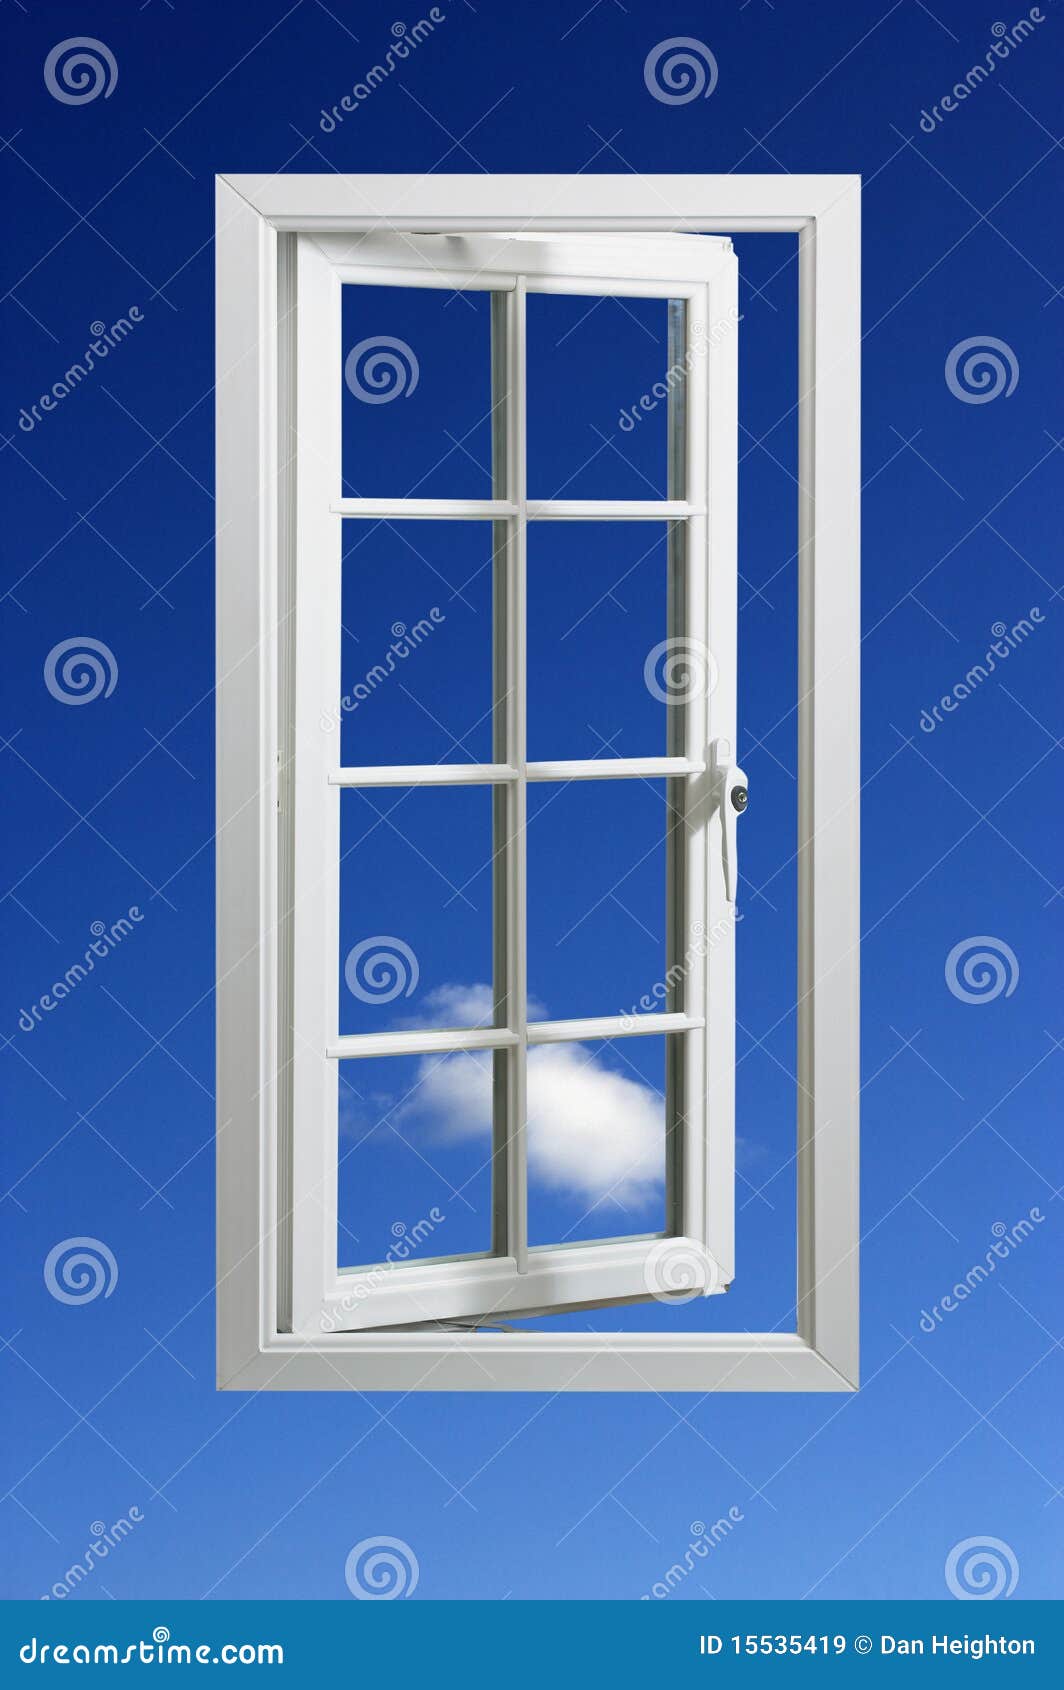 More similar stock images of ` Modern white window frame in blue sky `